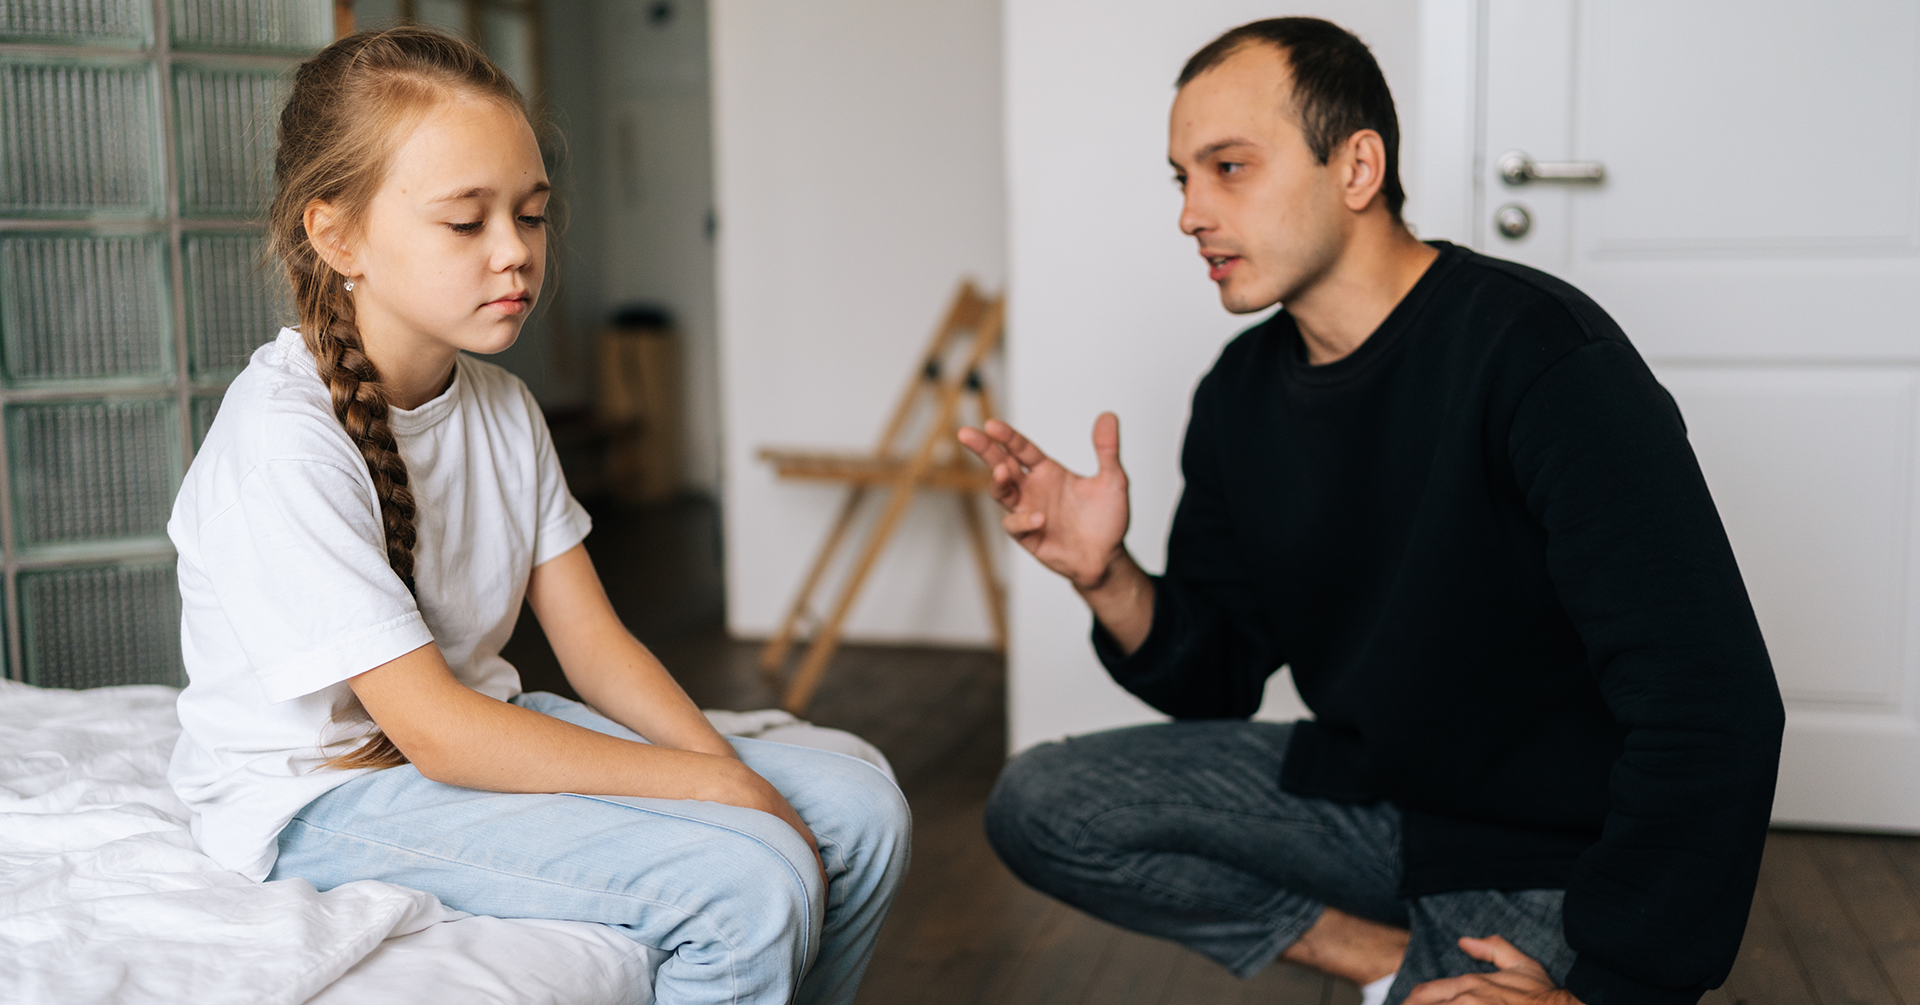 concerned parent talking to worried child about divorce